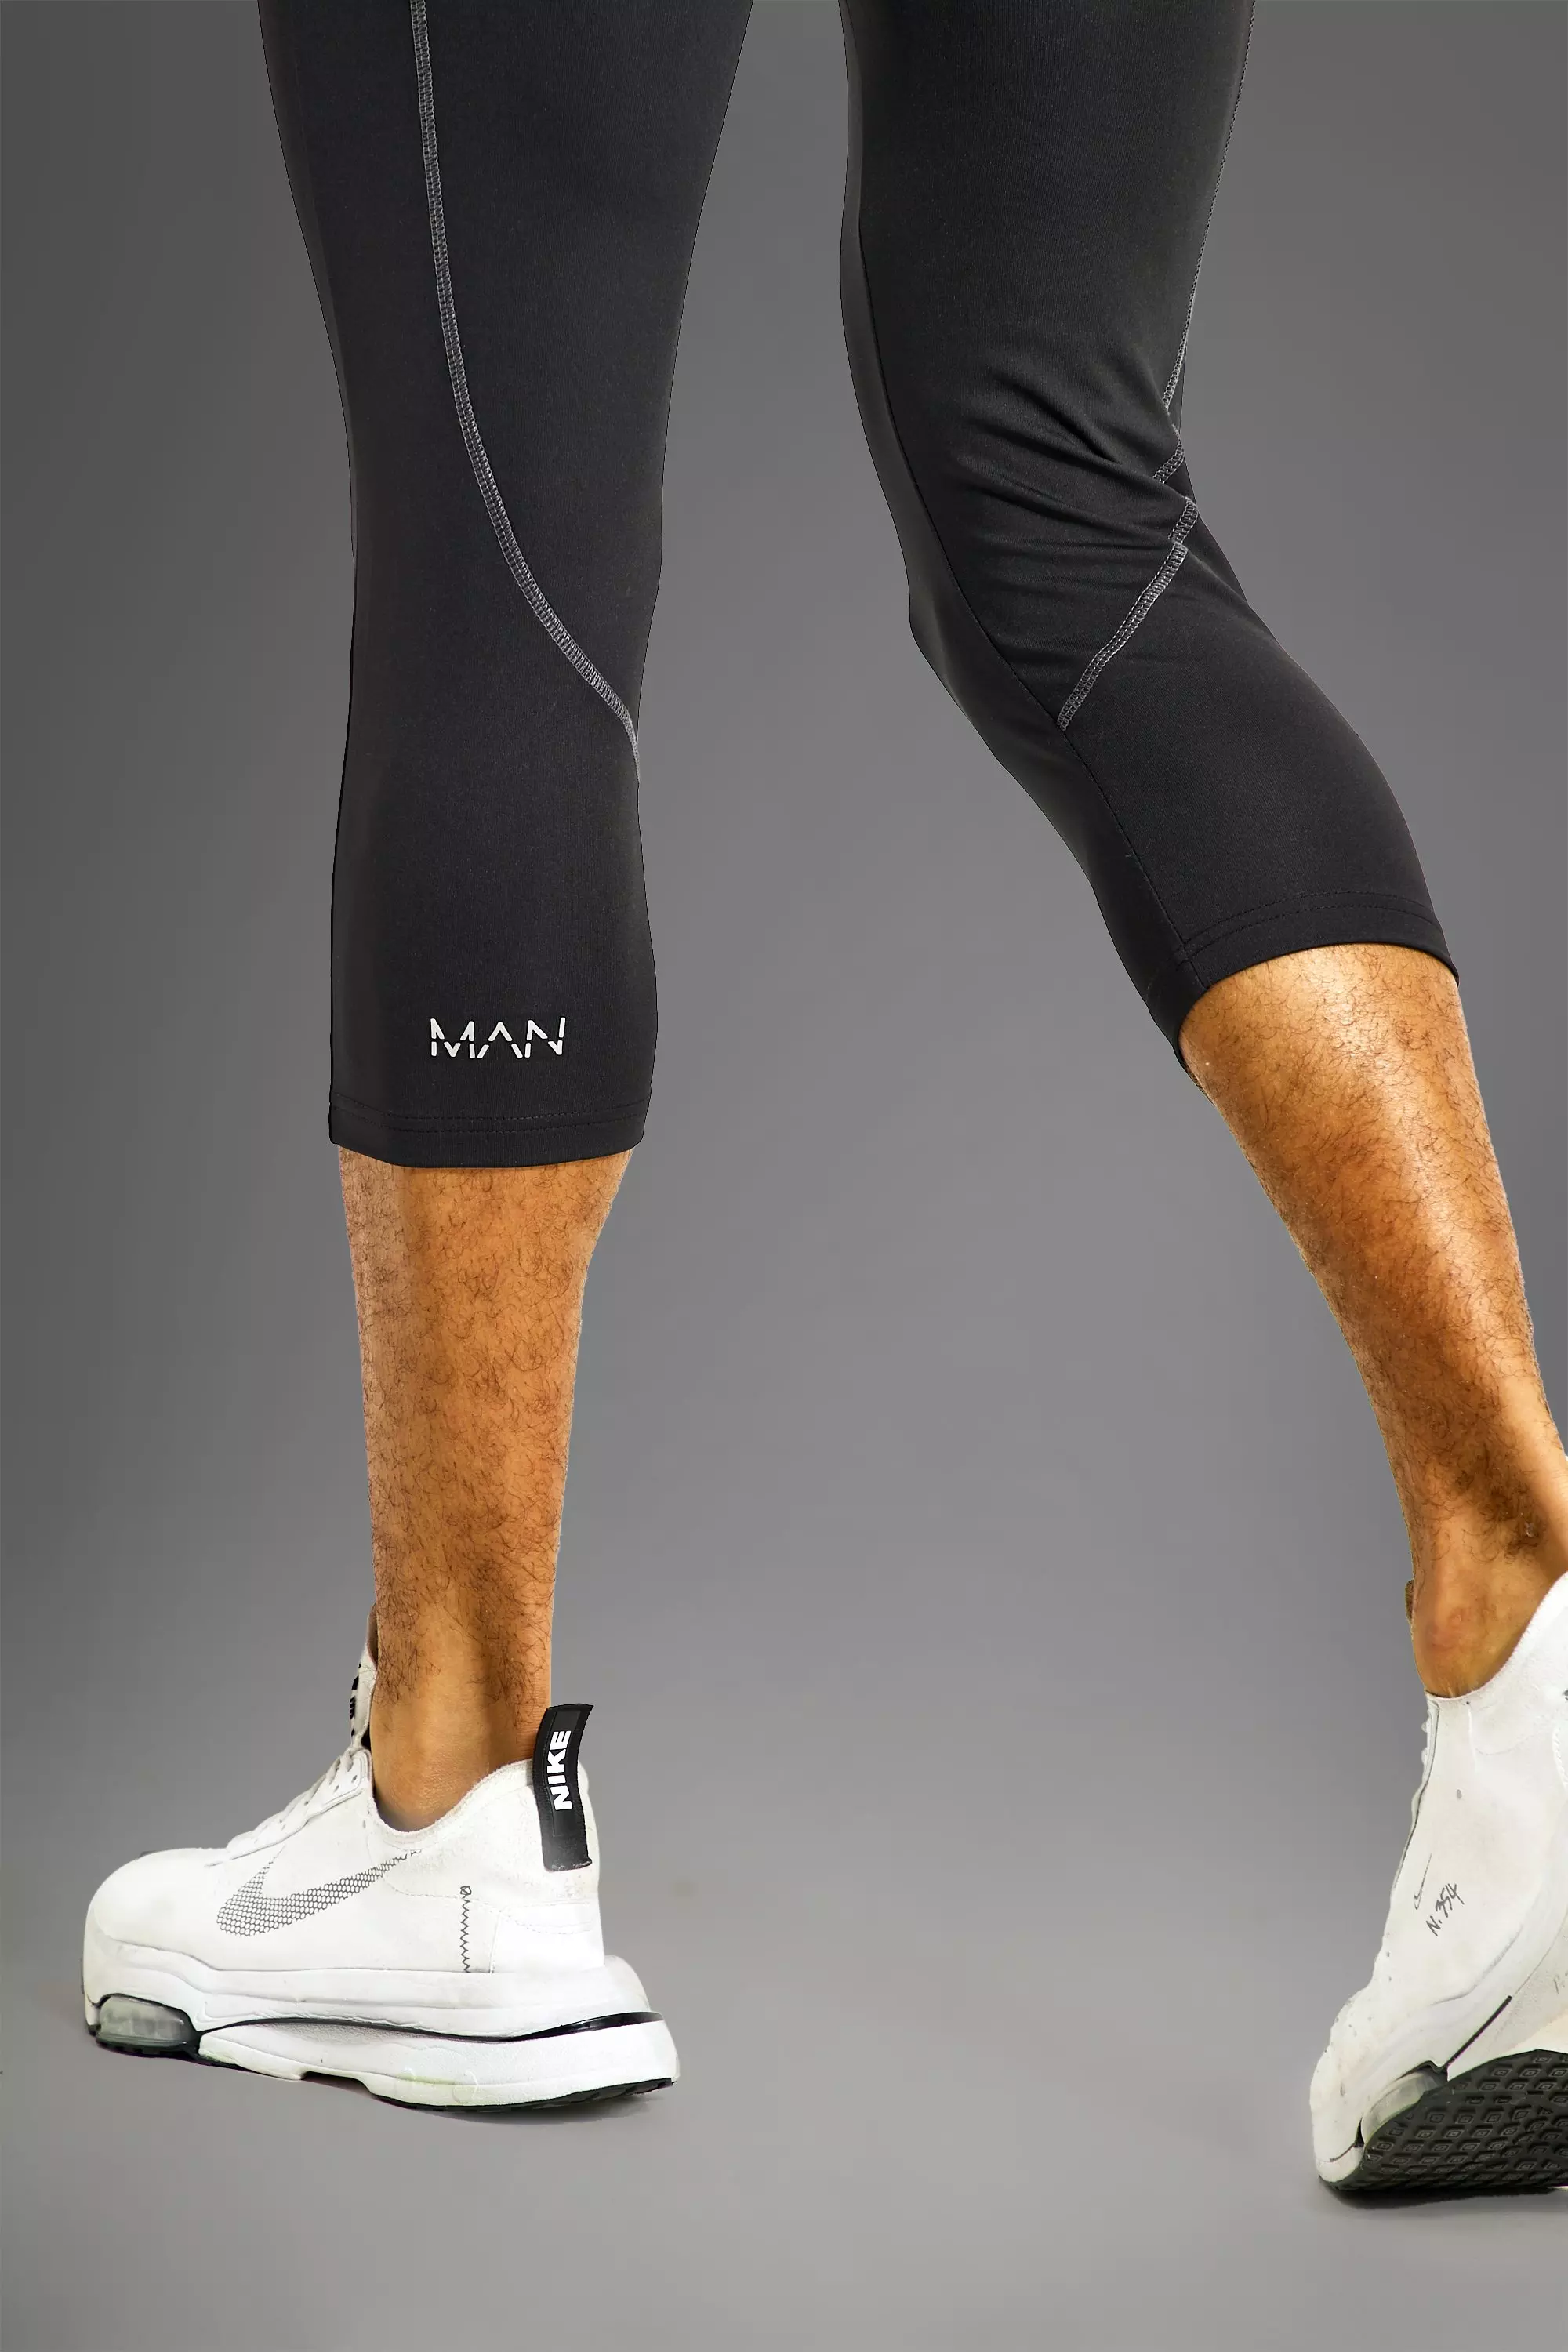 Men's XL Nike 3/4 Leggings